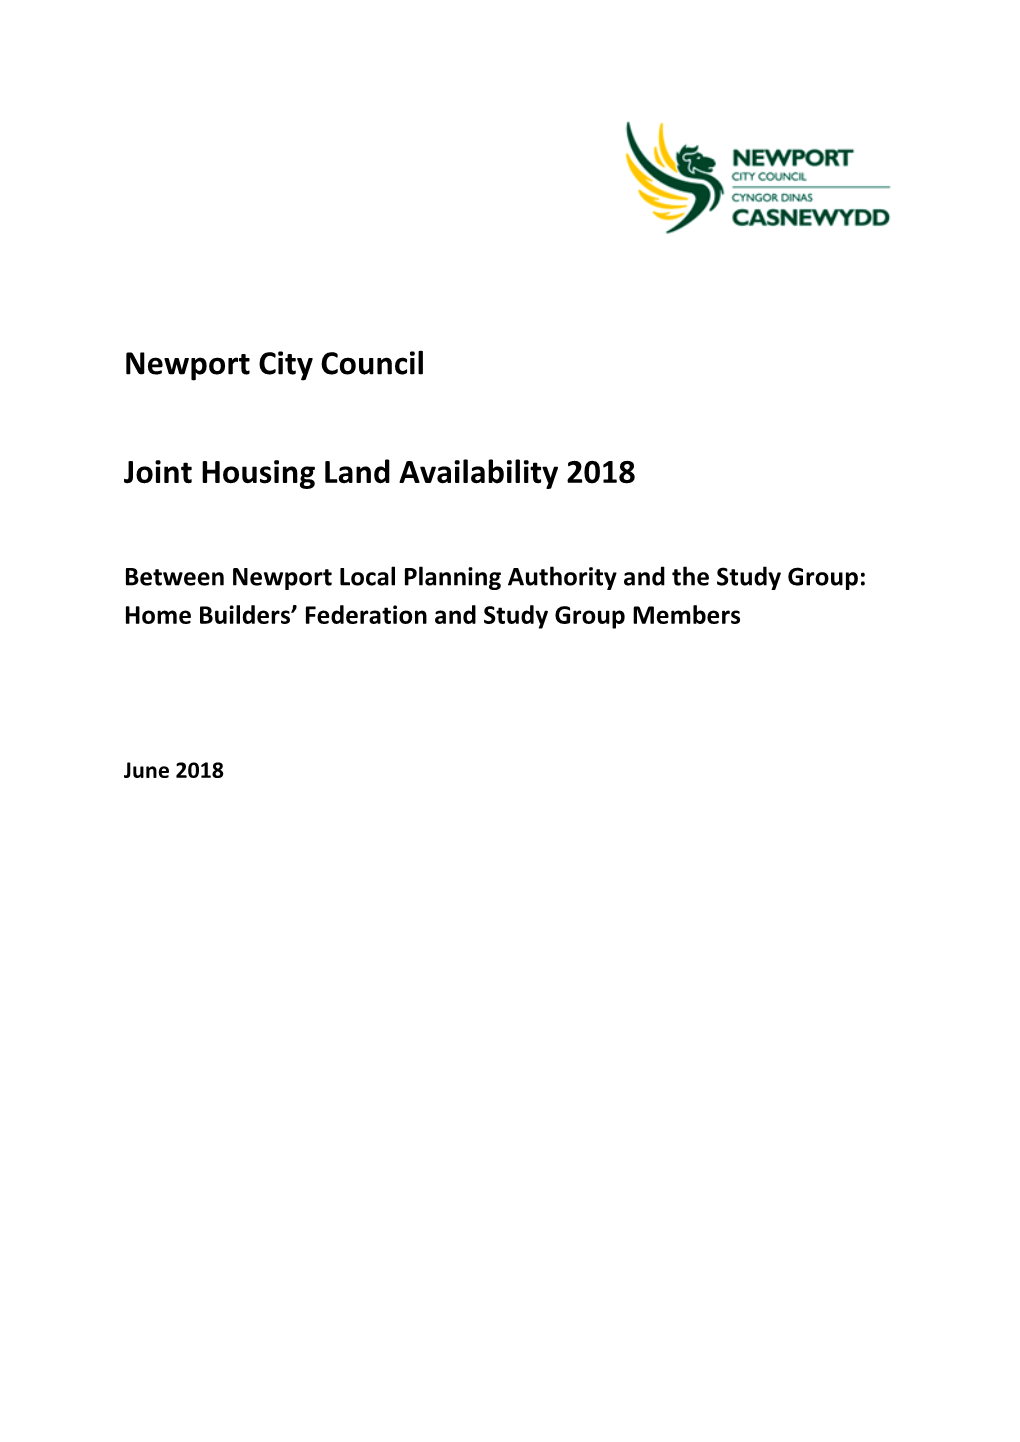 Newport City Council Joint Housing Land Availability 2018